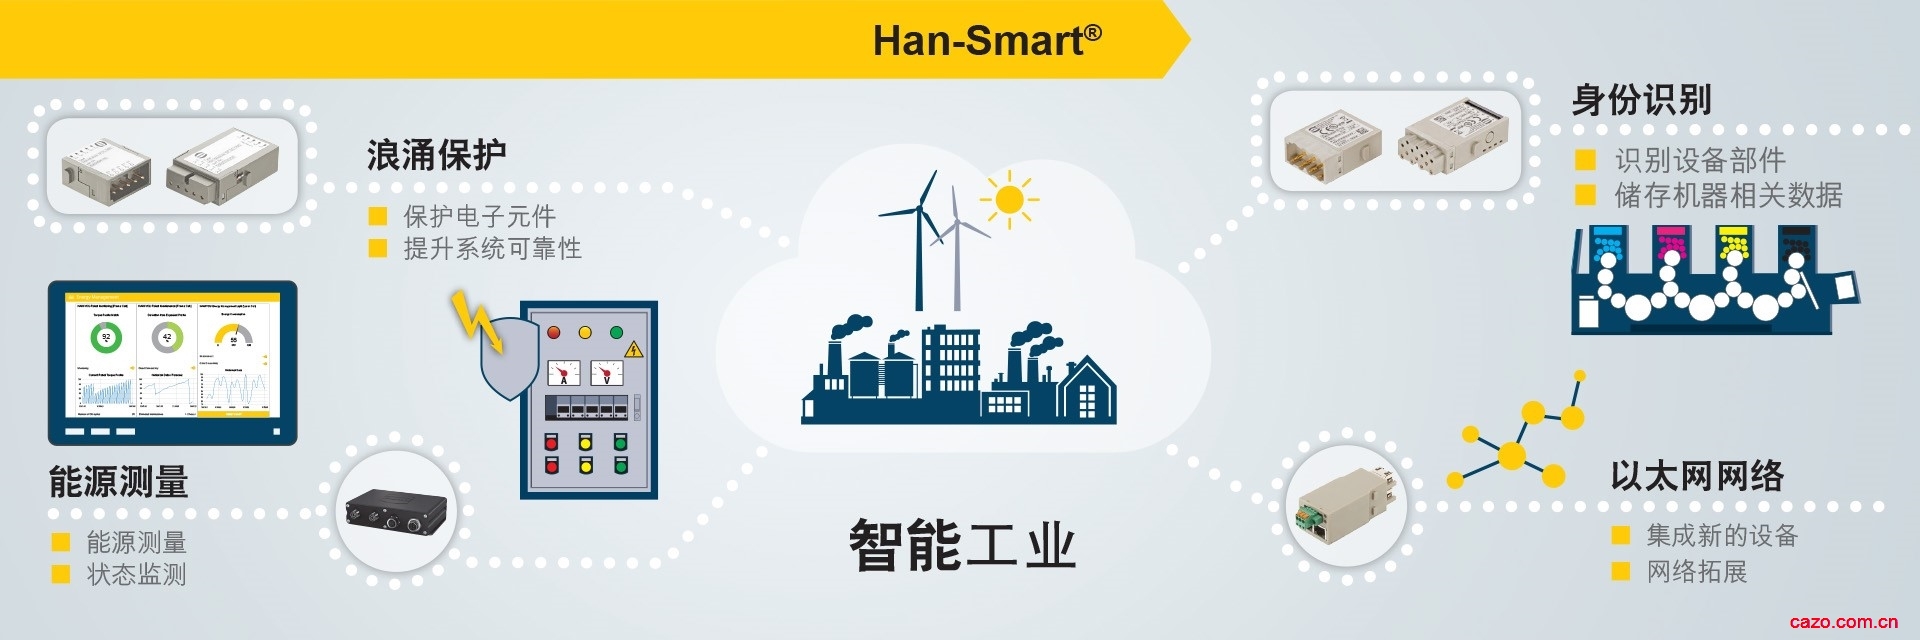 Han-Smart_S.CN